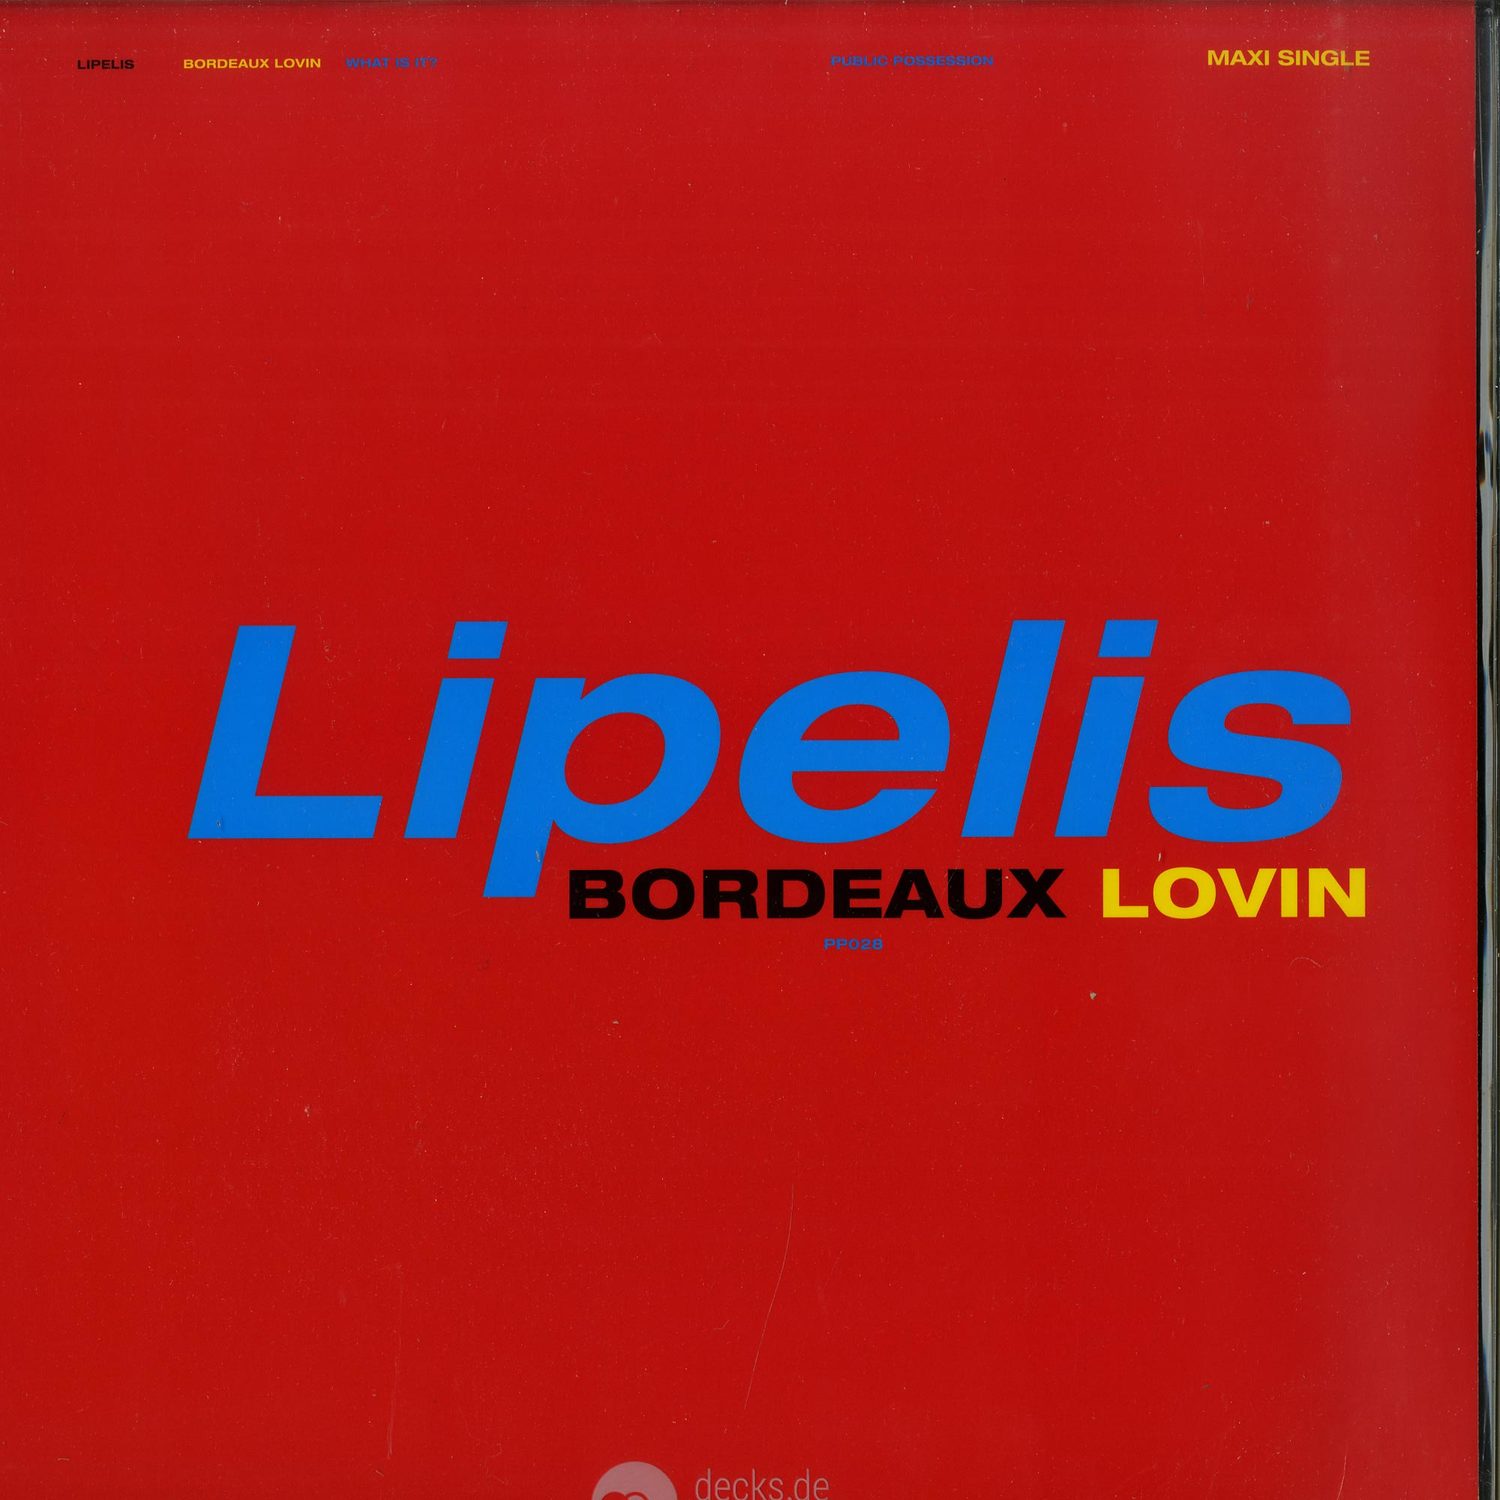 Lipelis - BORDEAUX LOVIN EP